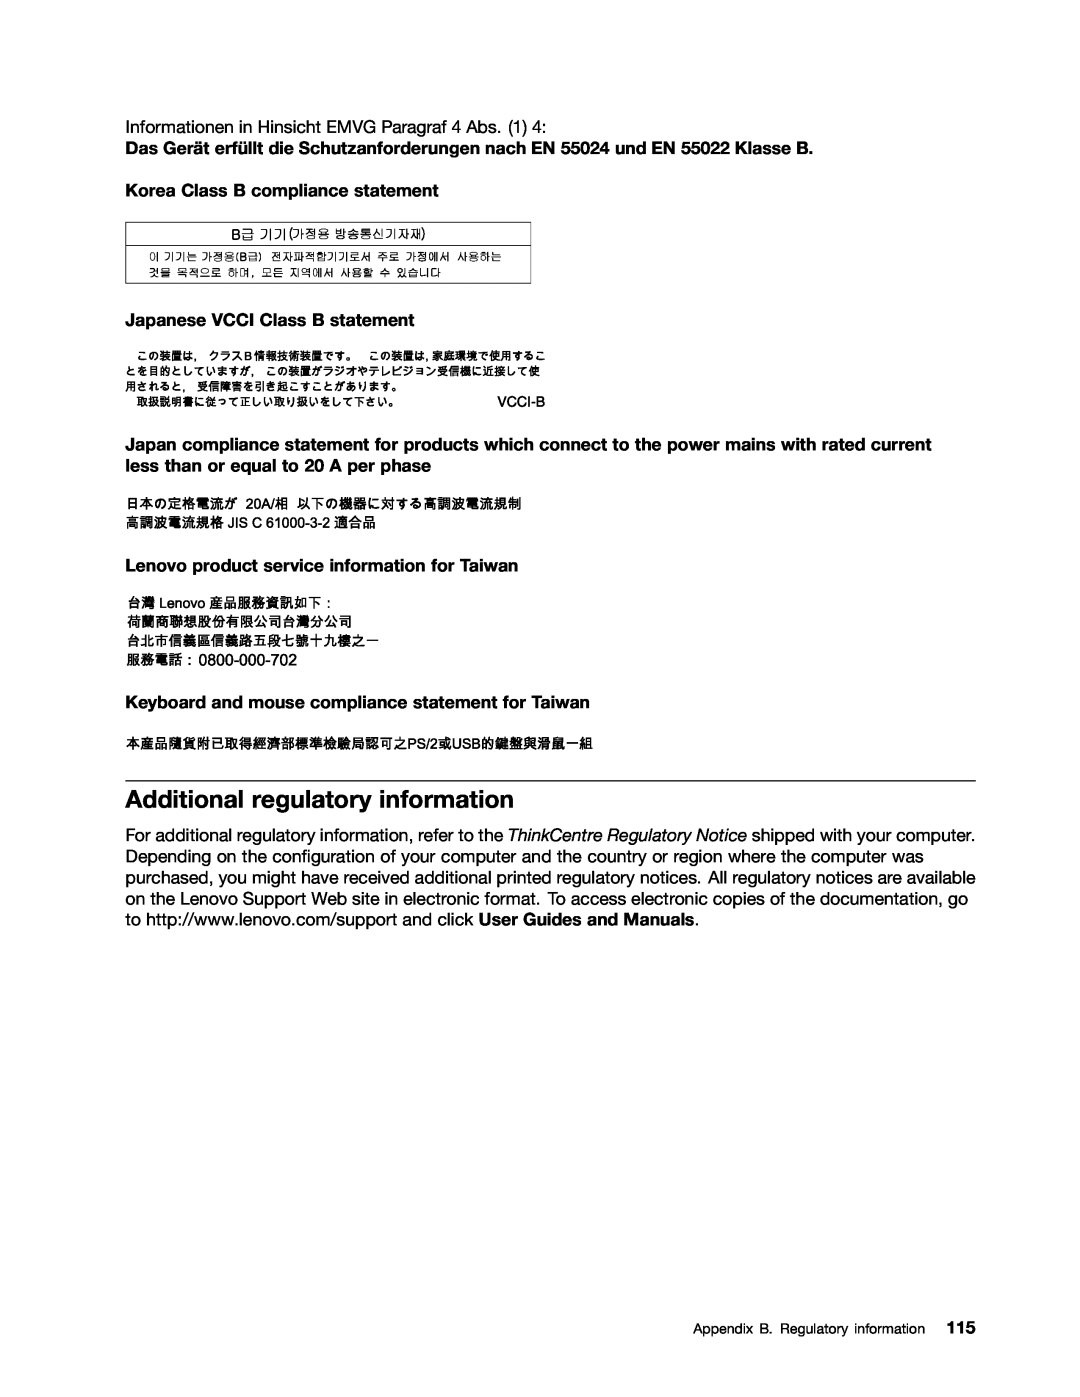 Lenovo 3157, 7339 Additional regulatory information, Korea Class B compliance statement Japanese VCCI Class B statement 